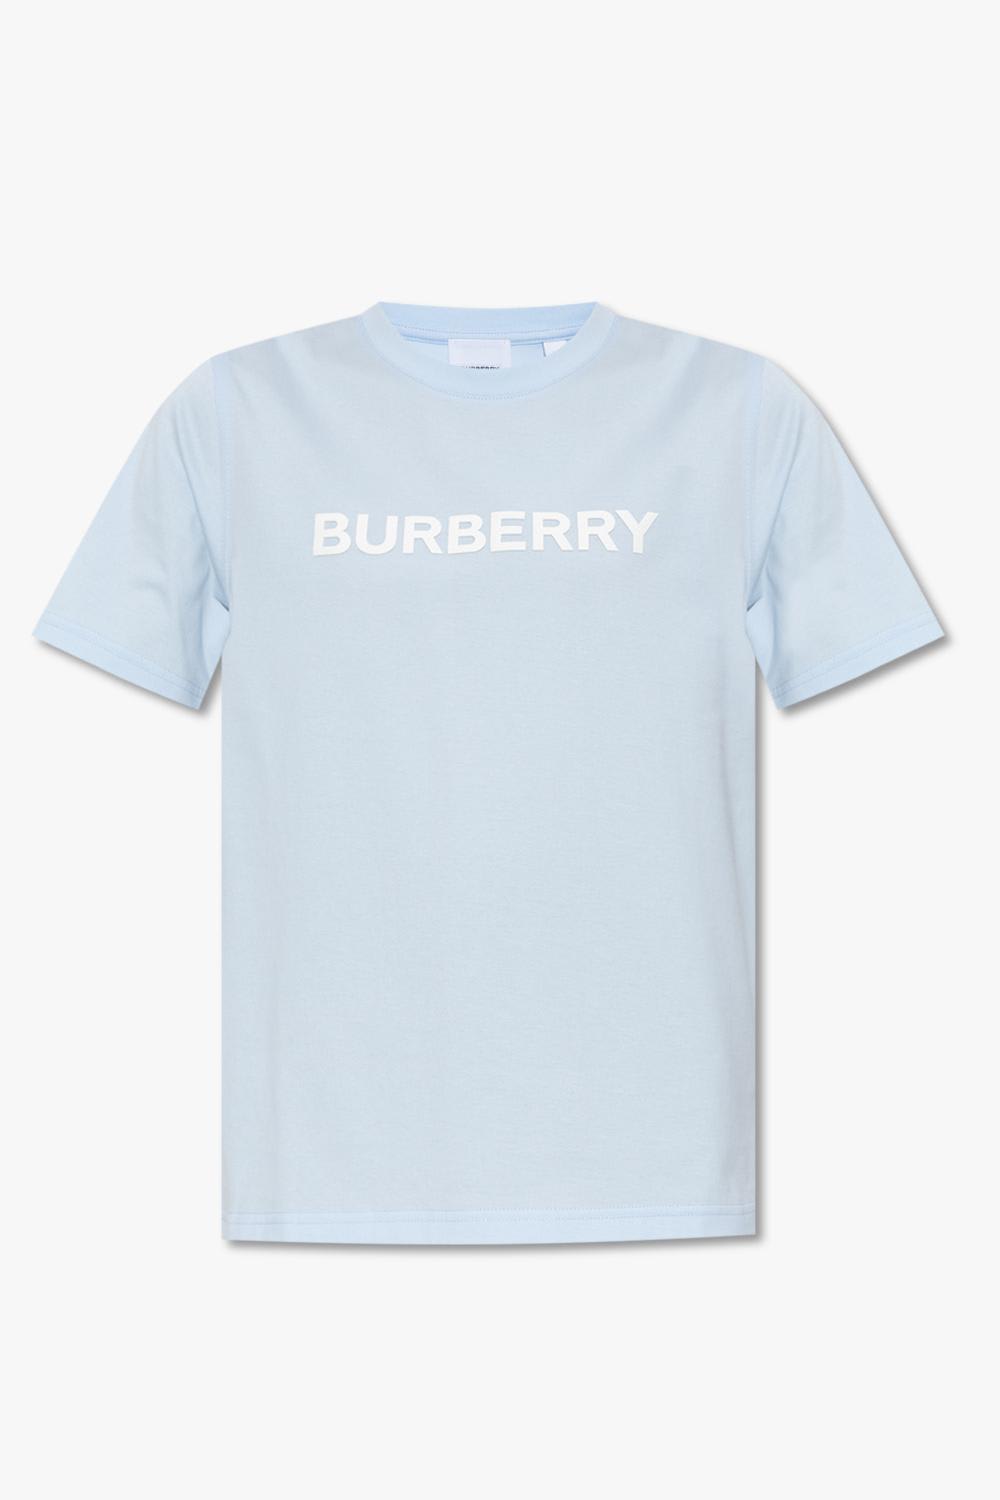 Burberry margot T-shirt With Logo